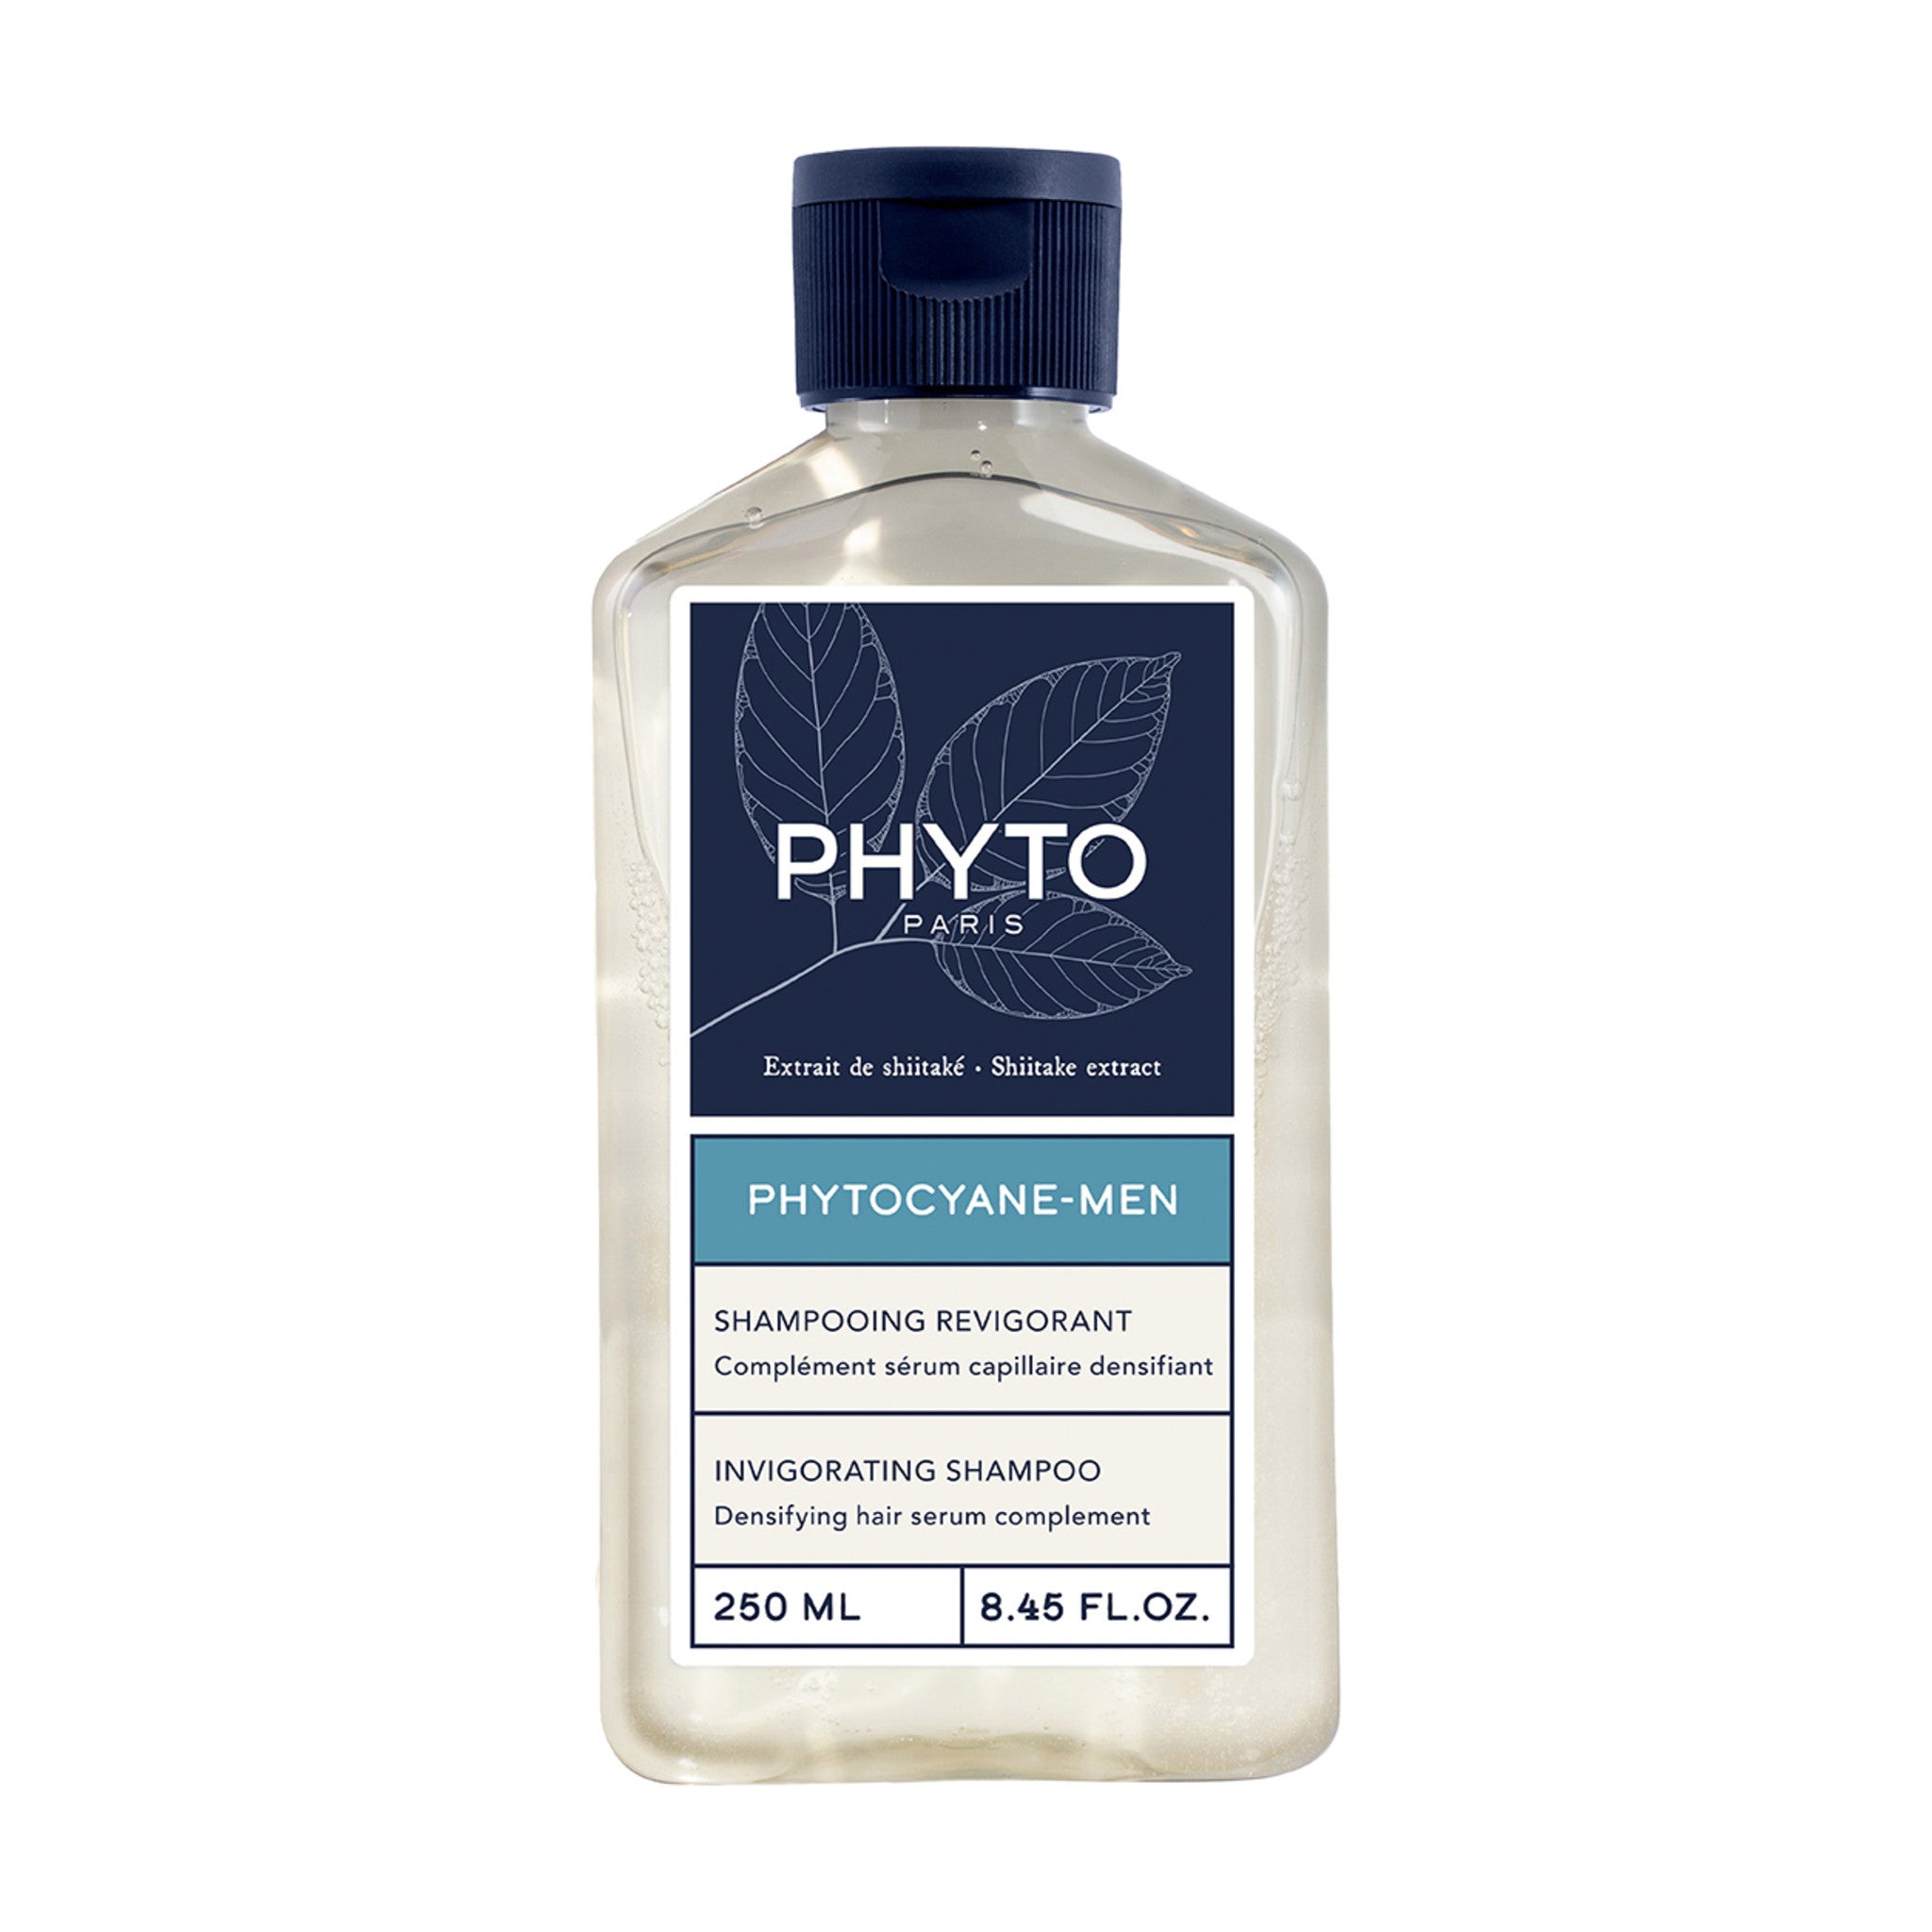 Phyto Phytocyane Invigorating Shampoo for Men main image.